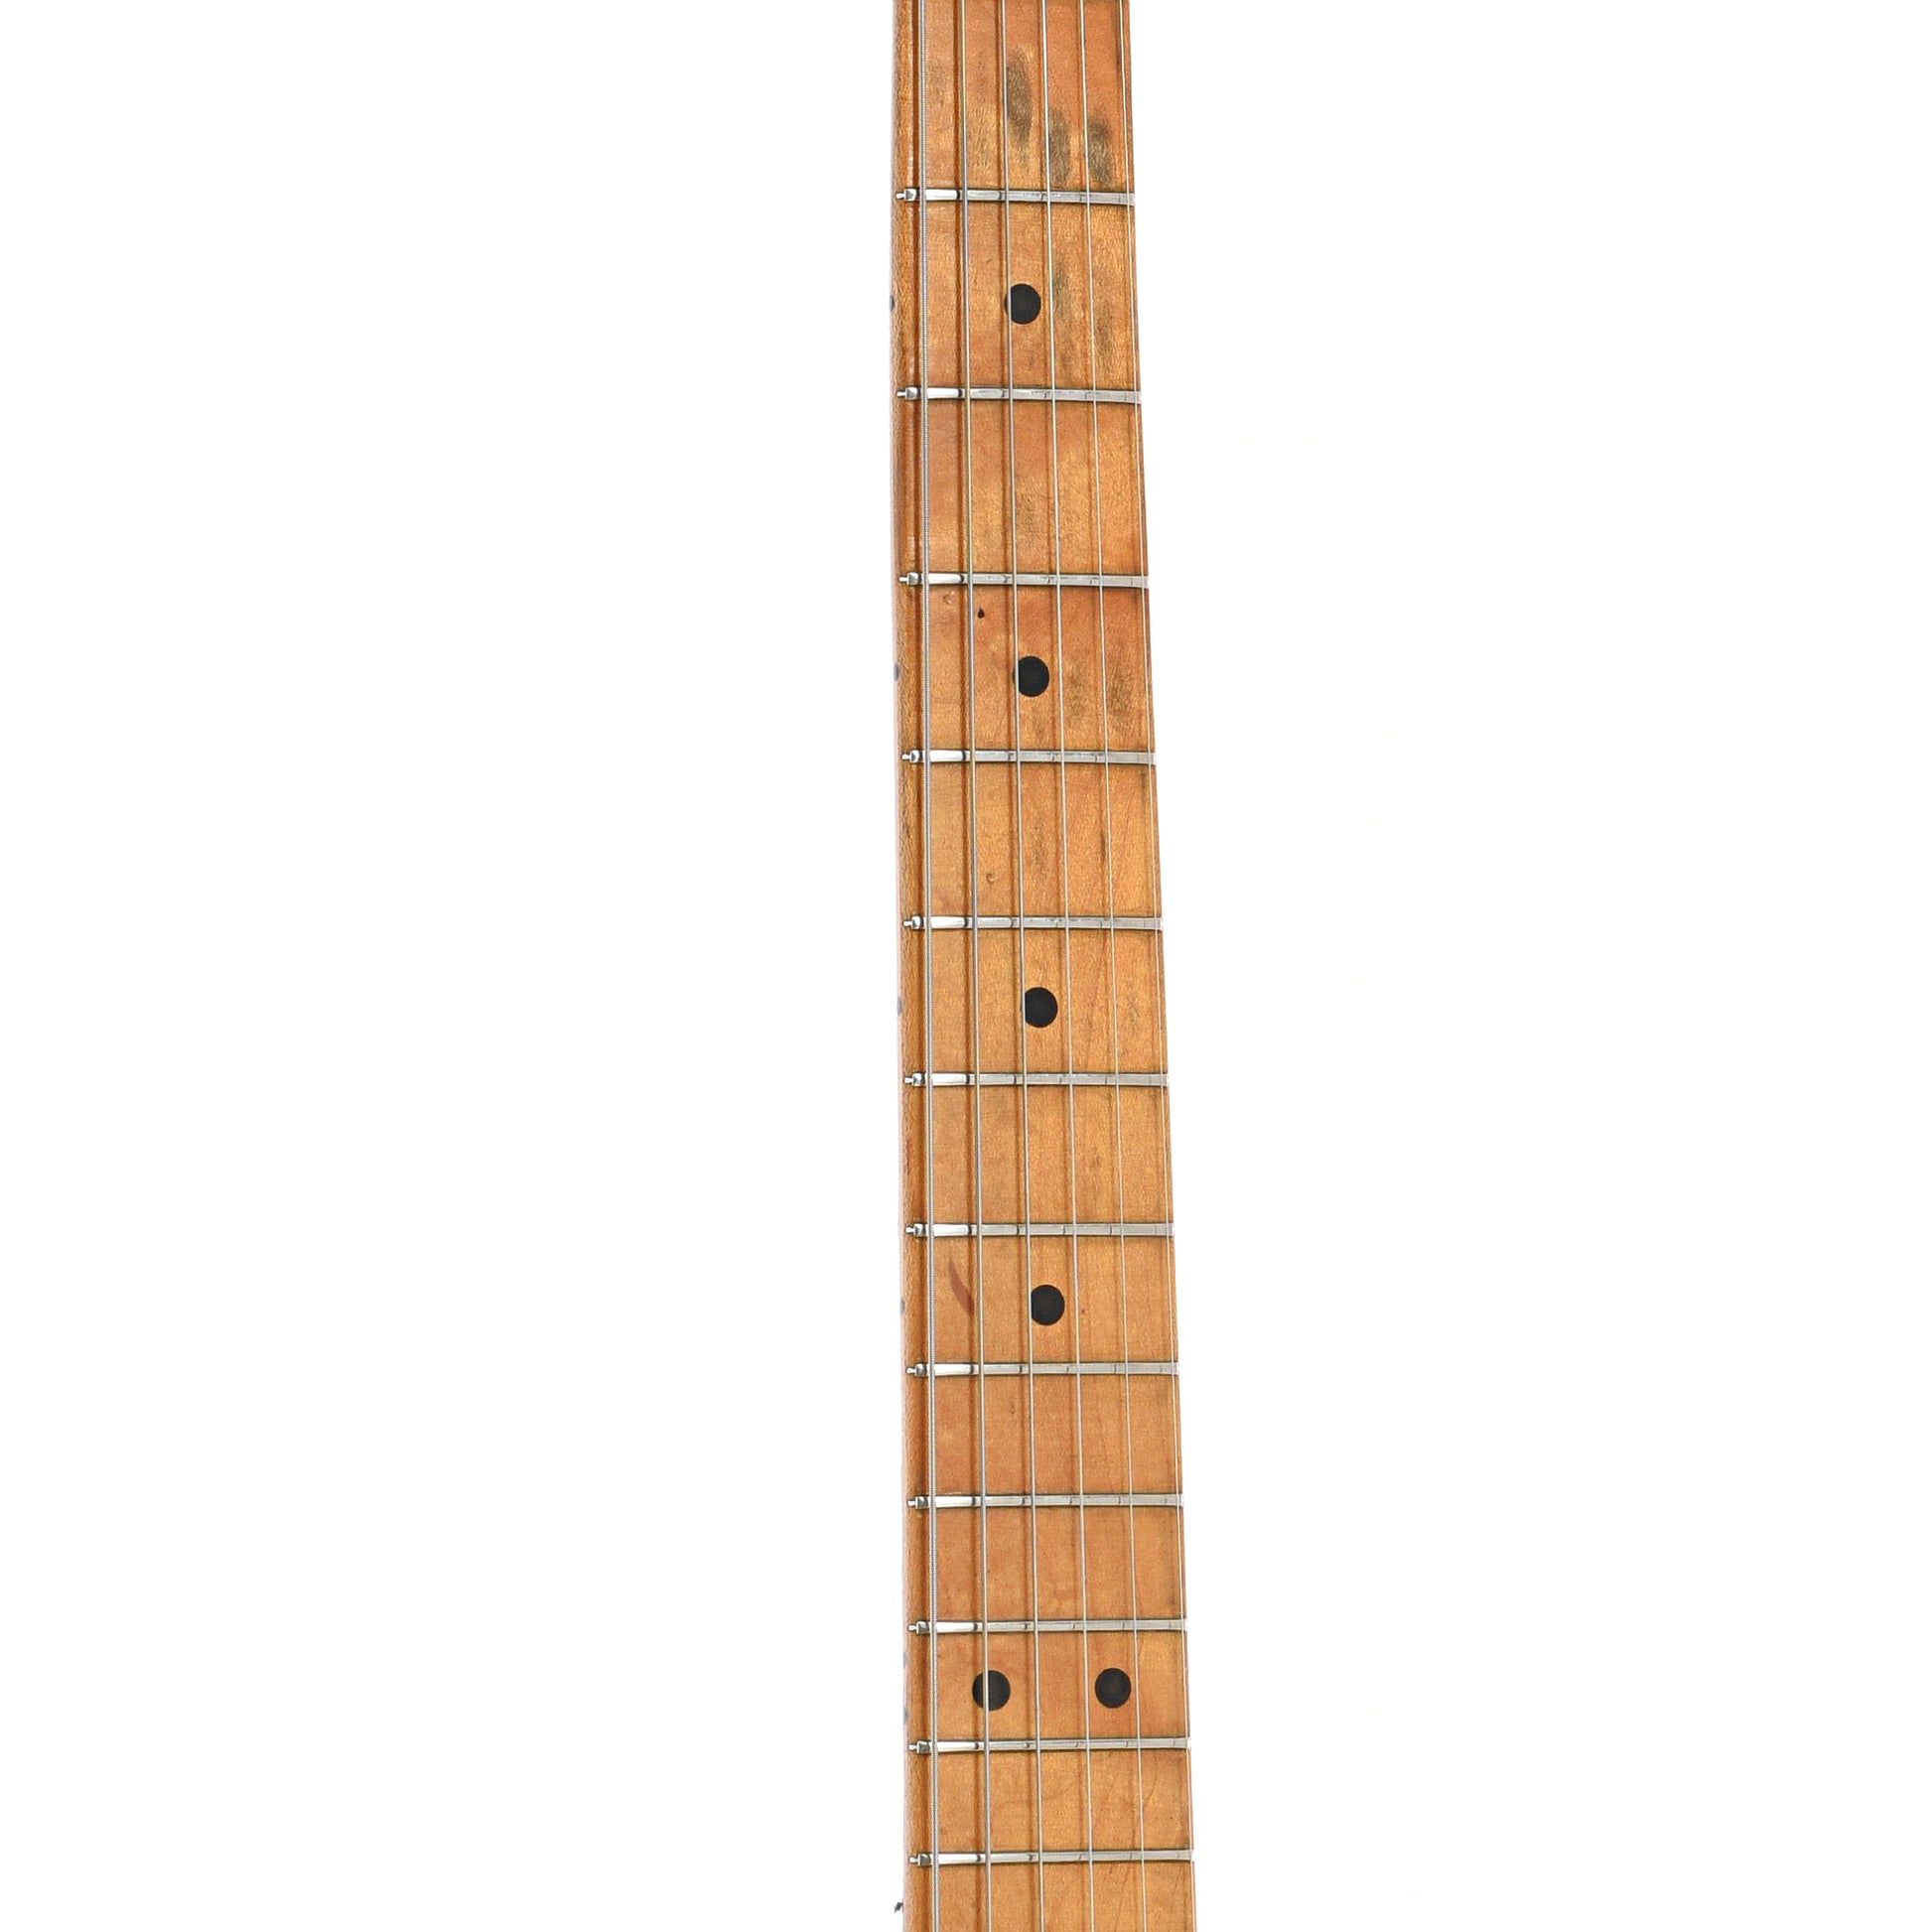 Fretboard of Fender Esquire Electric Guitar (1954)